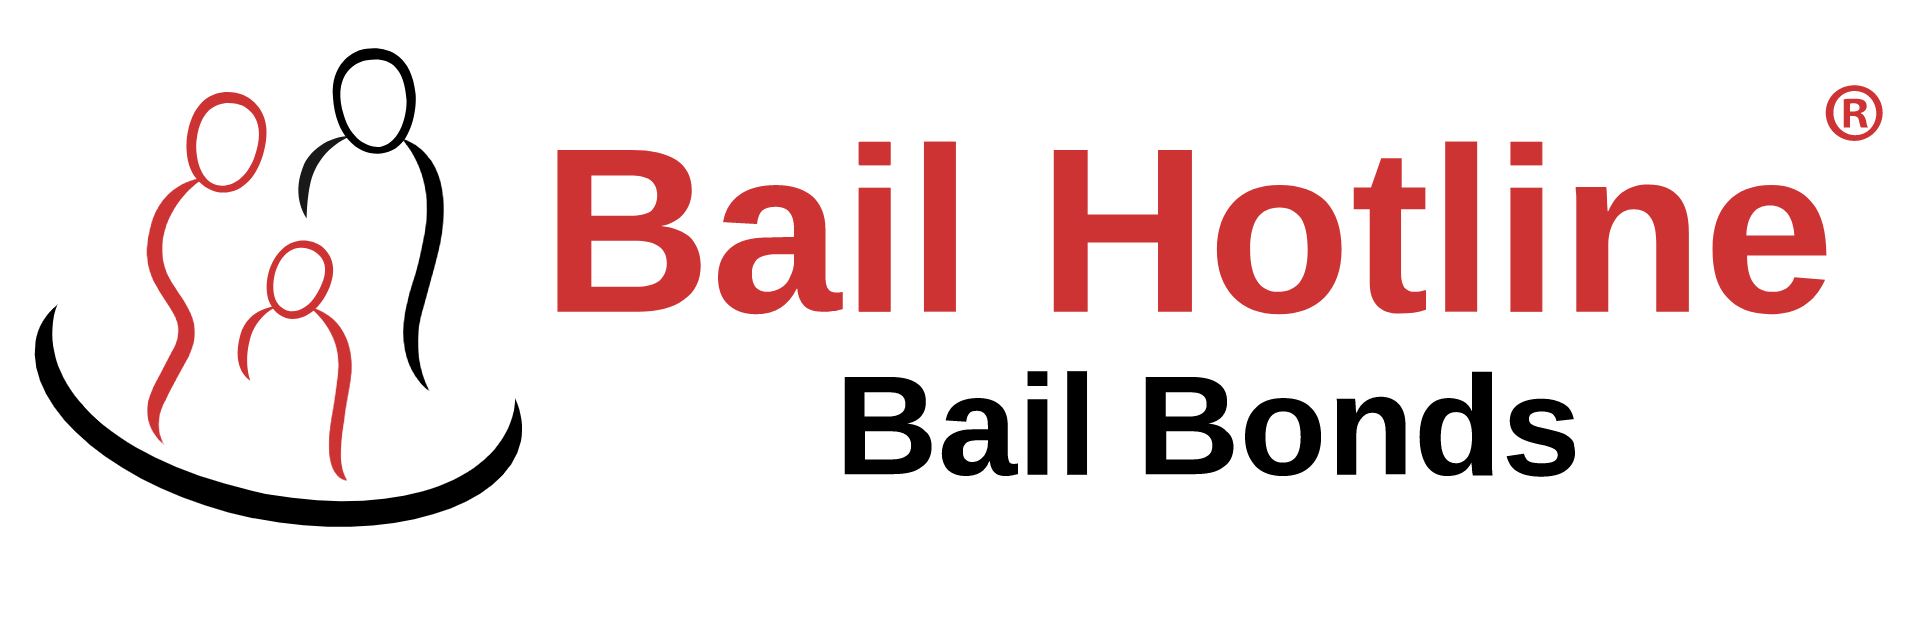 Bail Hotline Bail Bonds San Francisco's Logo